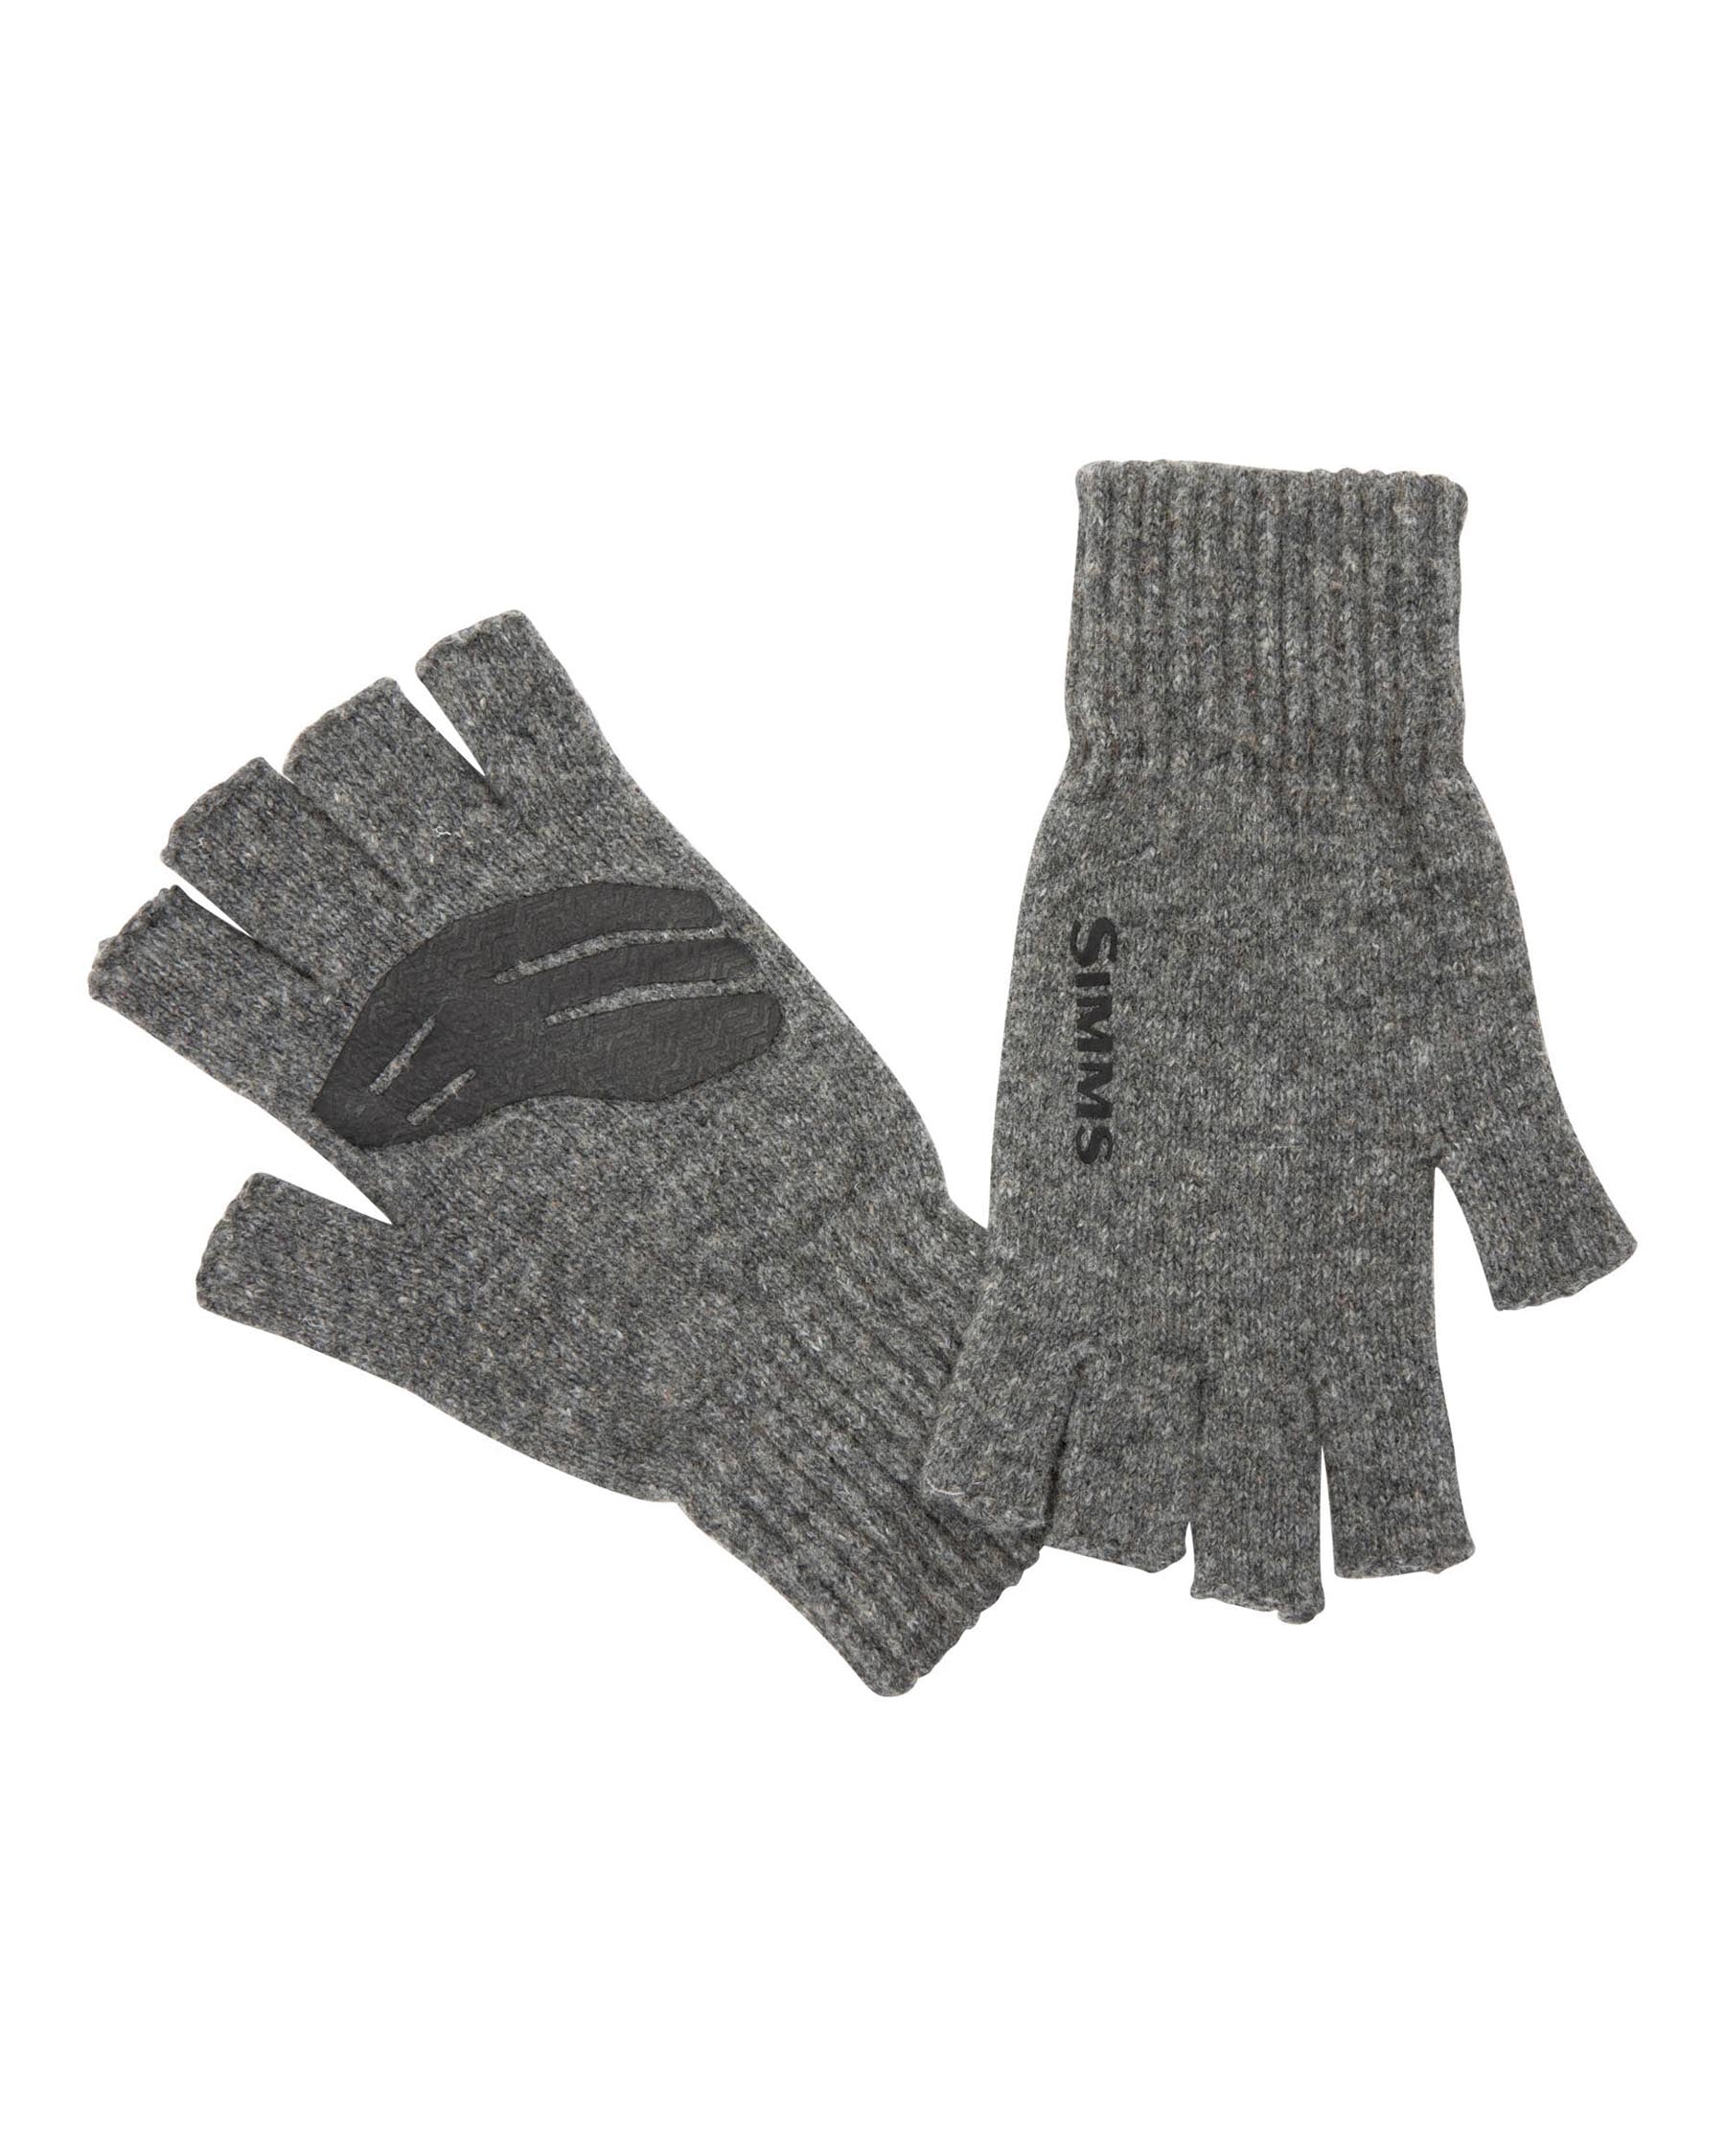 Simms half finger wool glove